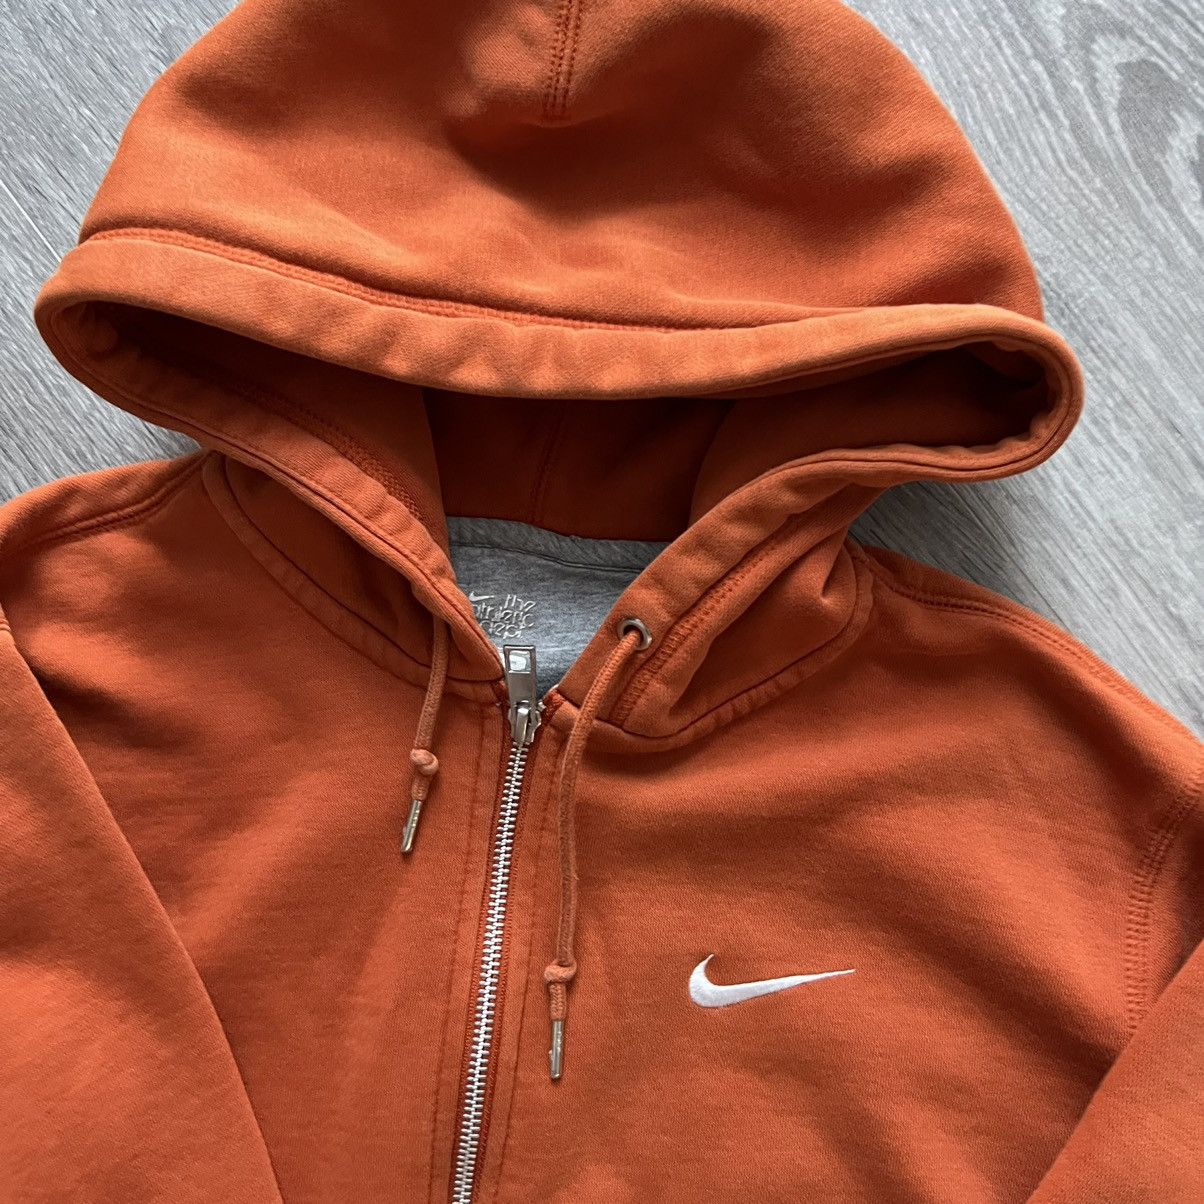 Nike Nike zip up hoodie orange Size US M / EU 48-50 / 2 - 2 Preview